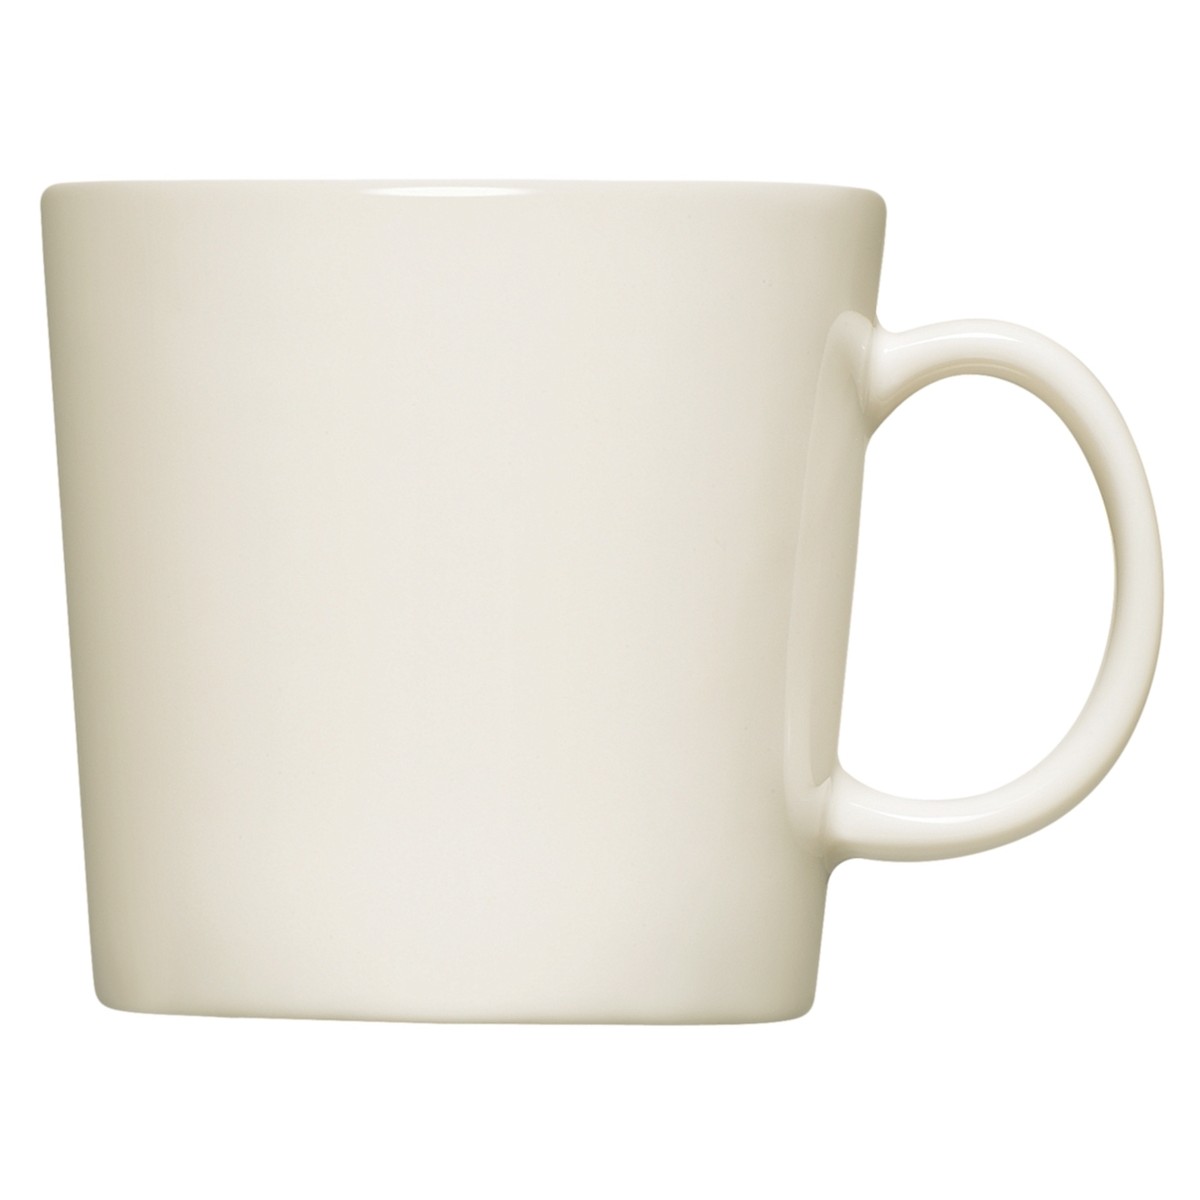 0.3l - mug Teema blanc - 1005484